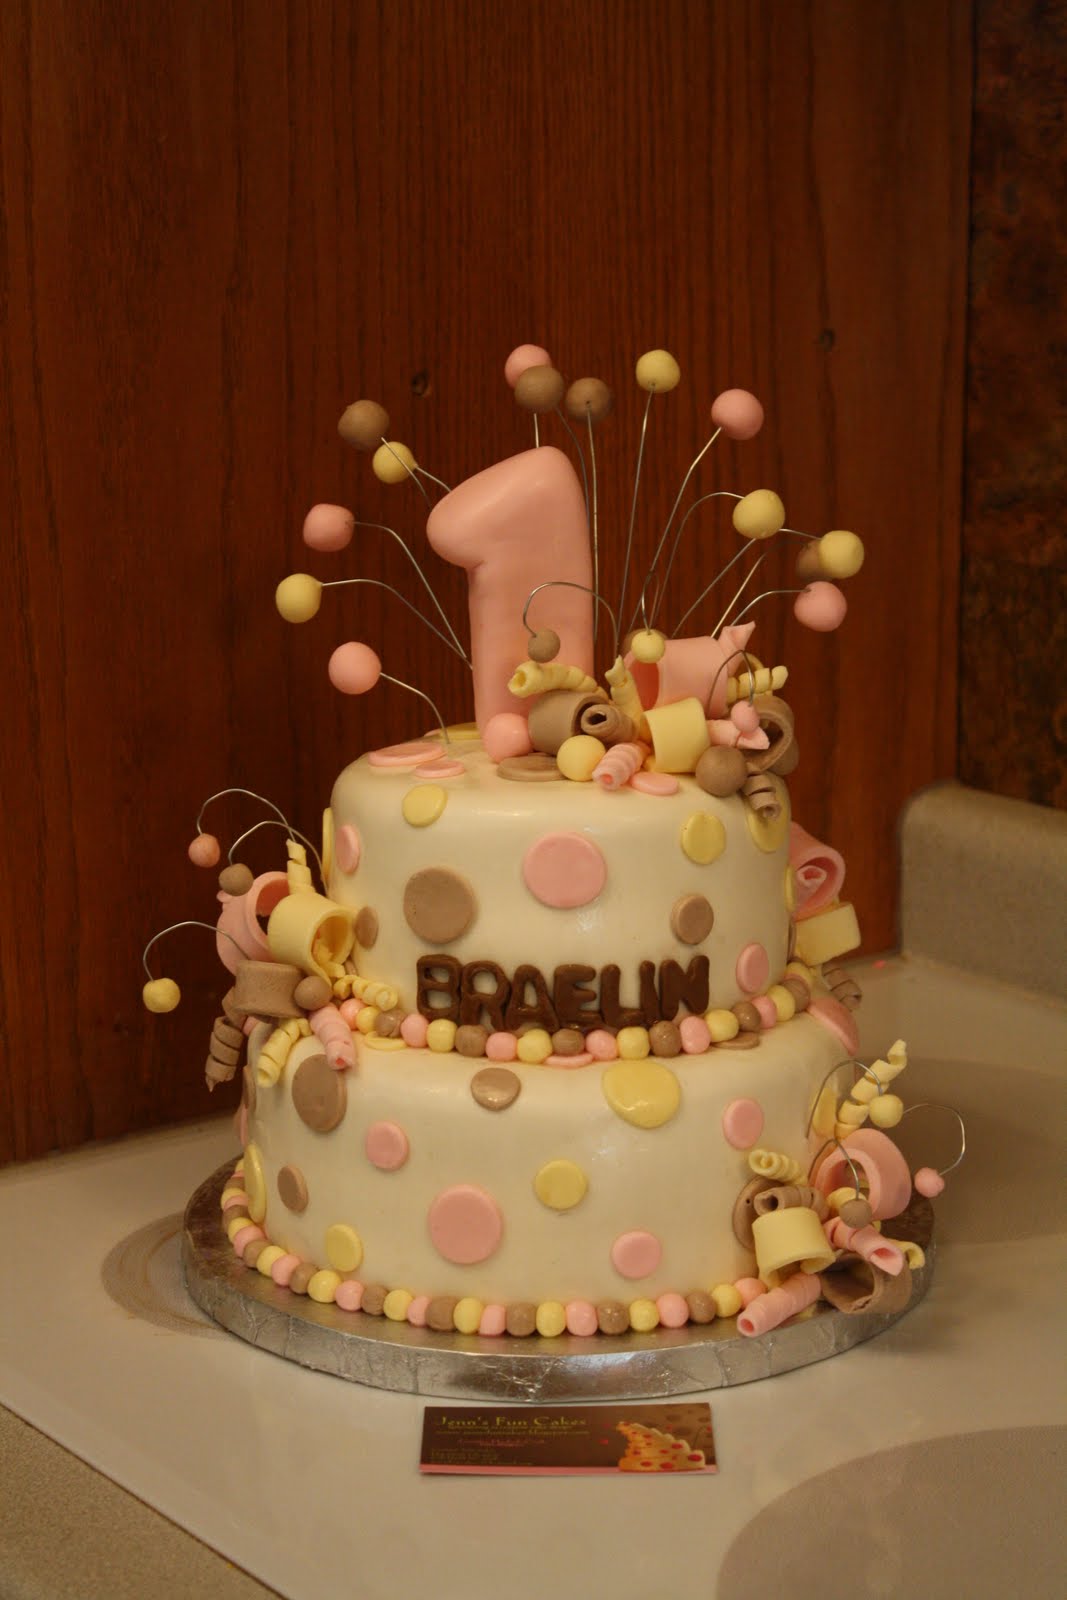 Top That!: 'Sweet Little Girls' Birthday Cake